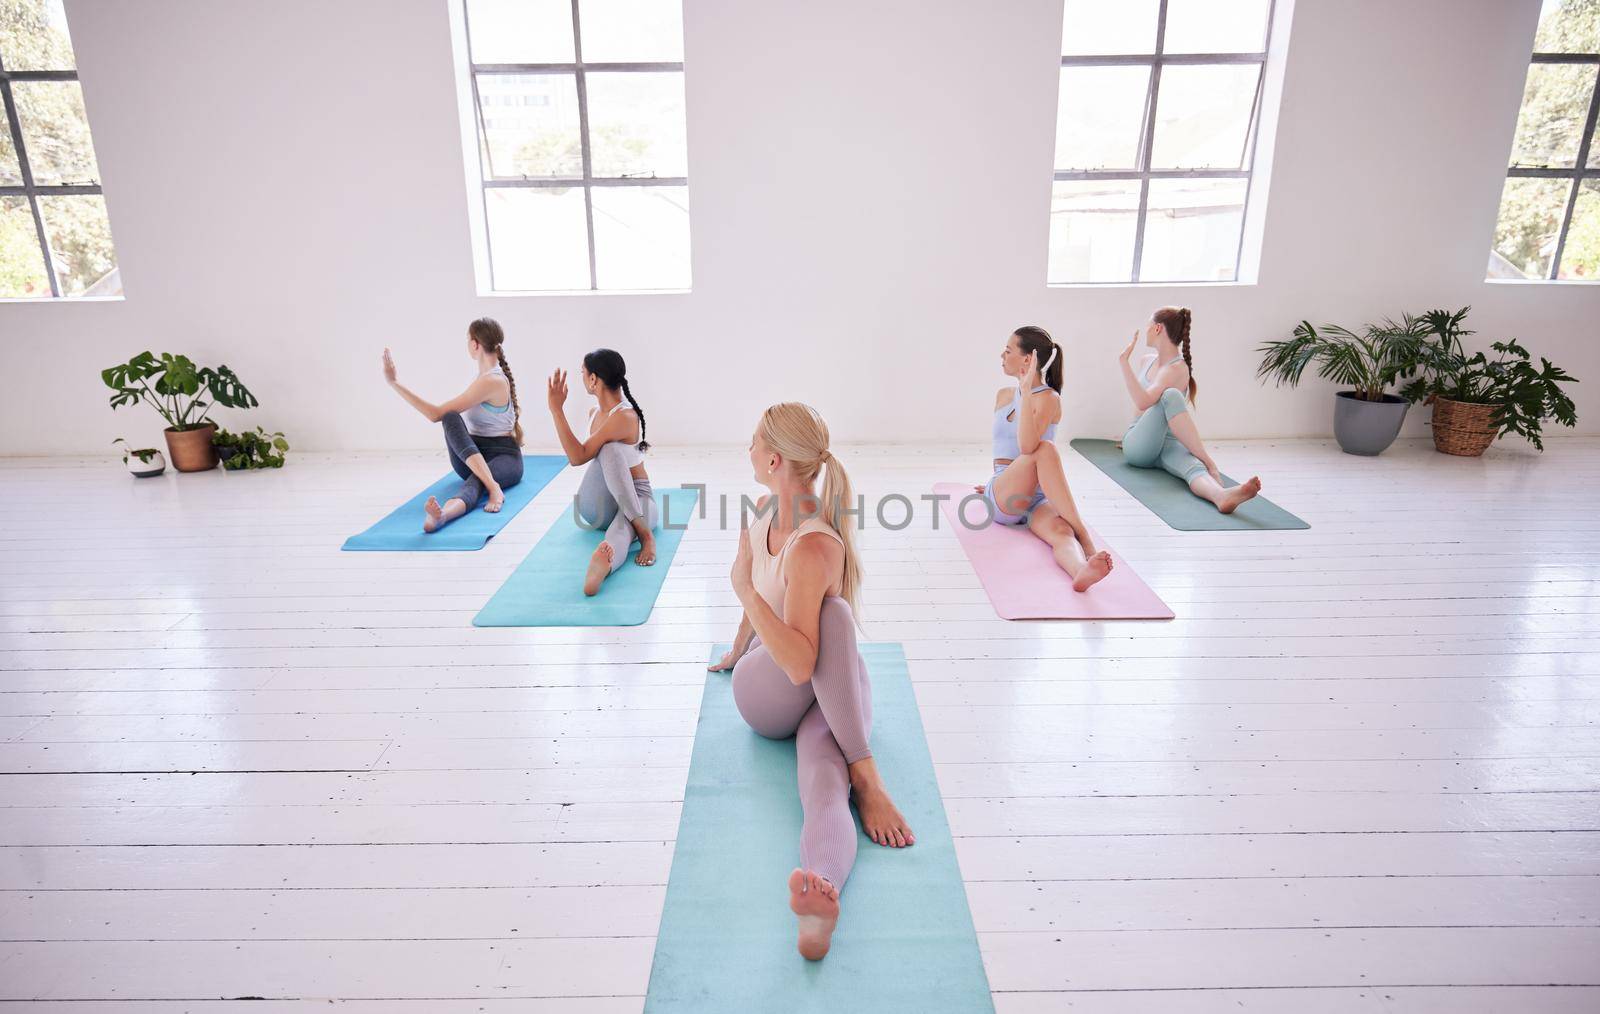 Group of women twisting in yoga studio. Flexible women sitting in yoga pose together. Group of flexible women stretching in pilates studio. Sporty women training together in yoga class.